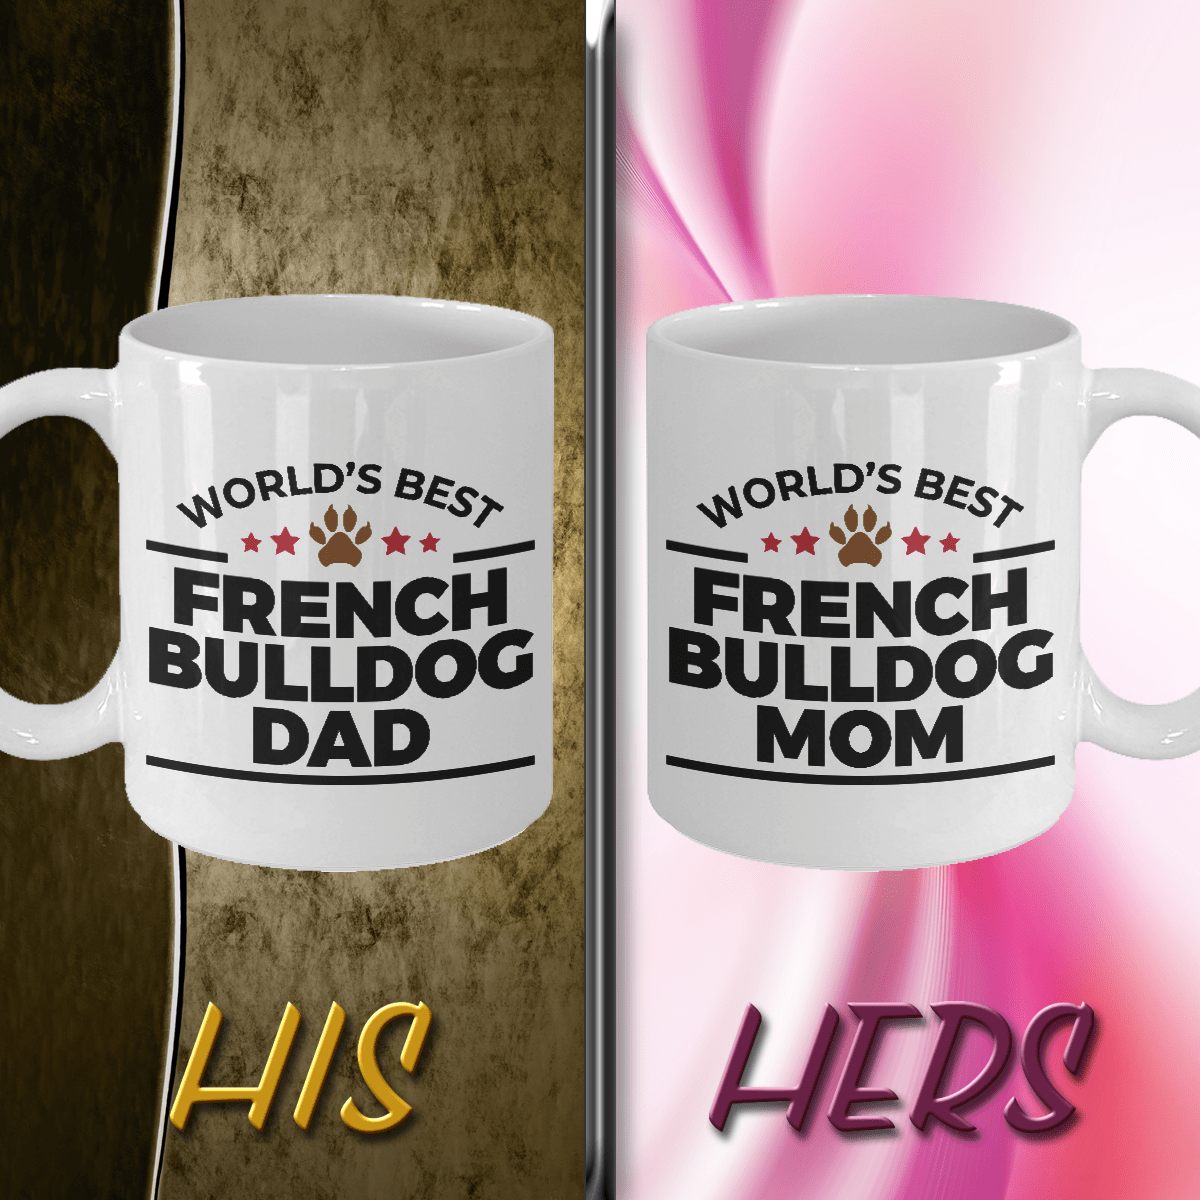 French Bulldog Mom and Dad Couples Ceramic Mugs - Set of 2